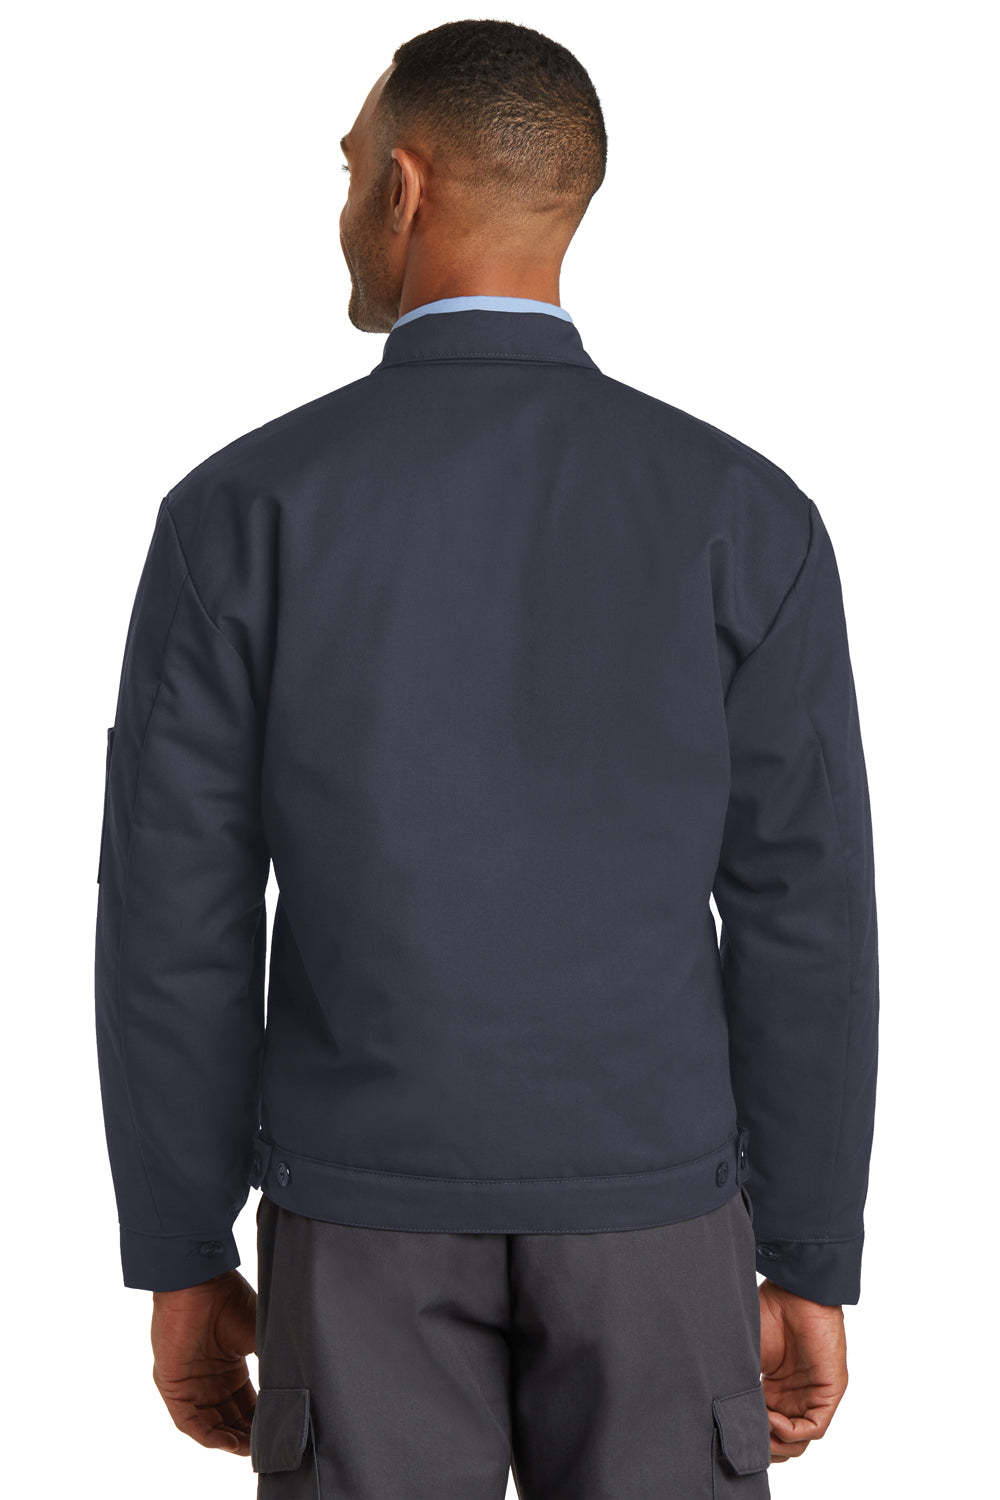 Red Kap CSJT22 Mens Full Zip Jacket Charcoal Grey Back